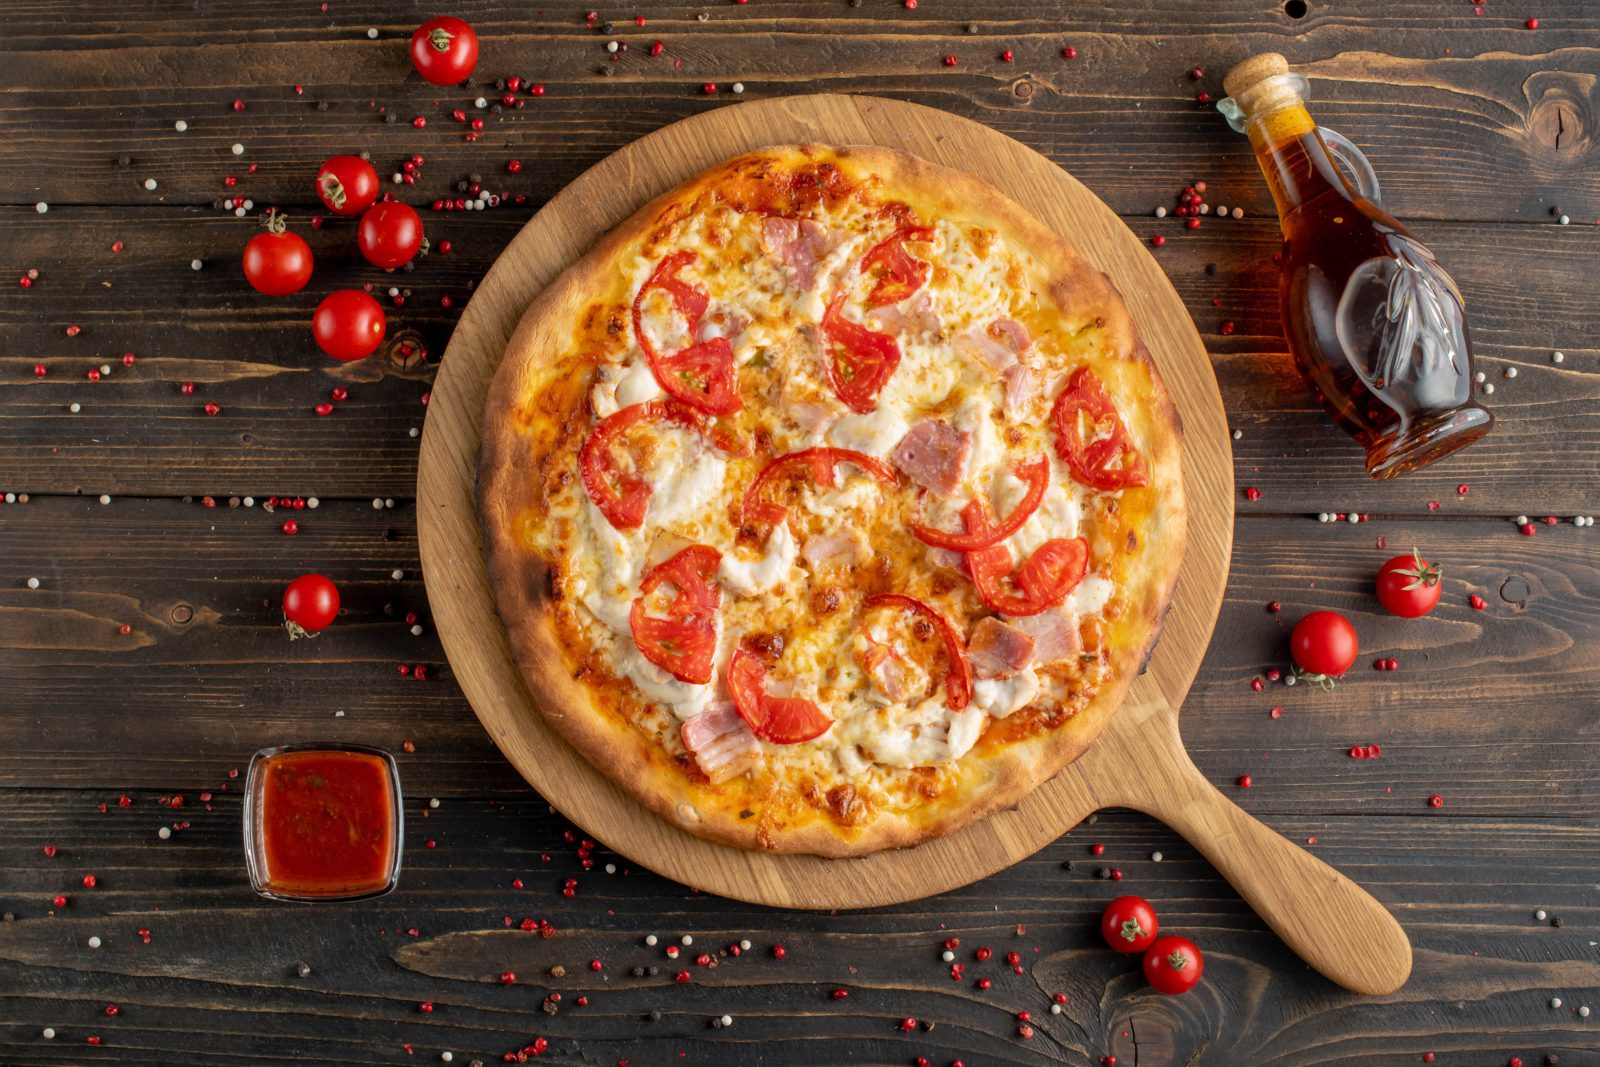 томатный соус на пиццу рецепт с фото фото 82